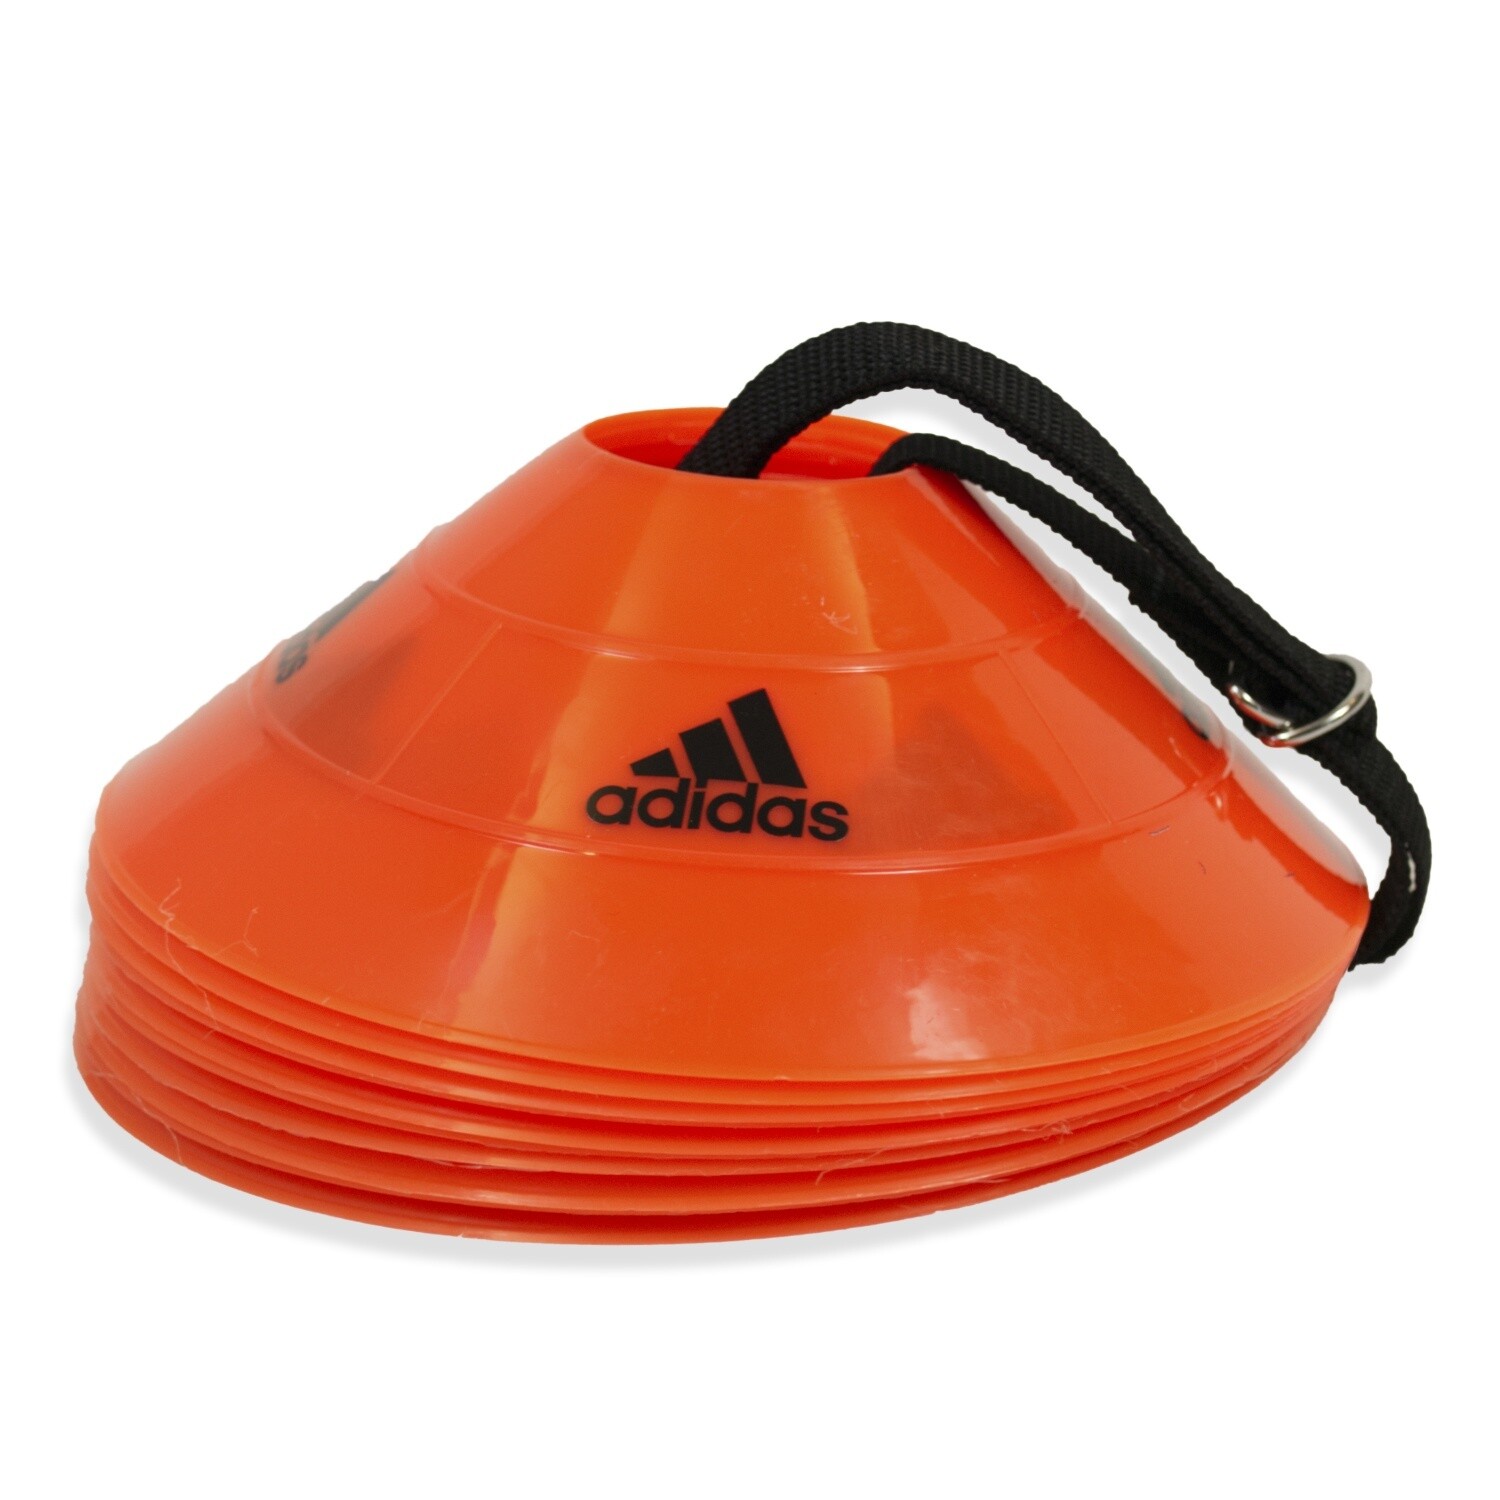 adidas Field Cones - 10 Pack